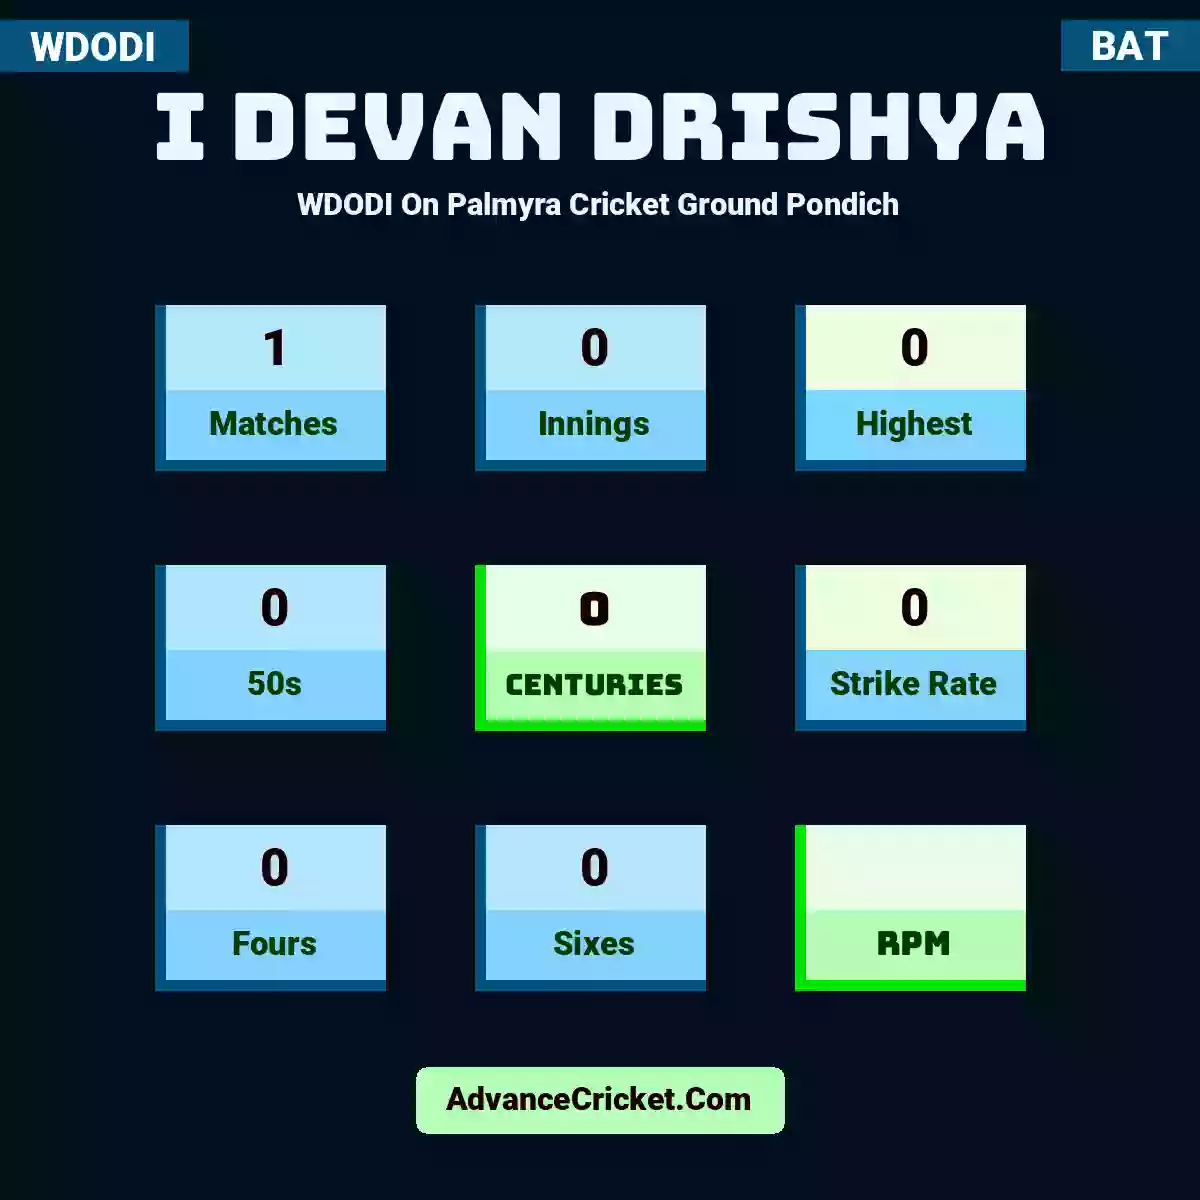 I Devan Drishya WDODI  On Palmyra Cricket Ground Pondich, I Devan Drishya played 1 matches, scored 0 runs as highest, 0 half-centuries, and 0 centuries, with a strike rate of 0. I.Devan.Drishya hit 0 fours and 0 sixes.